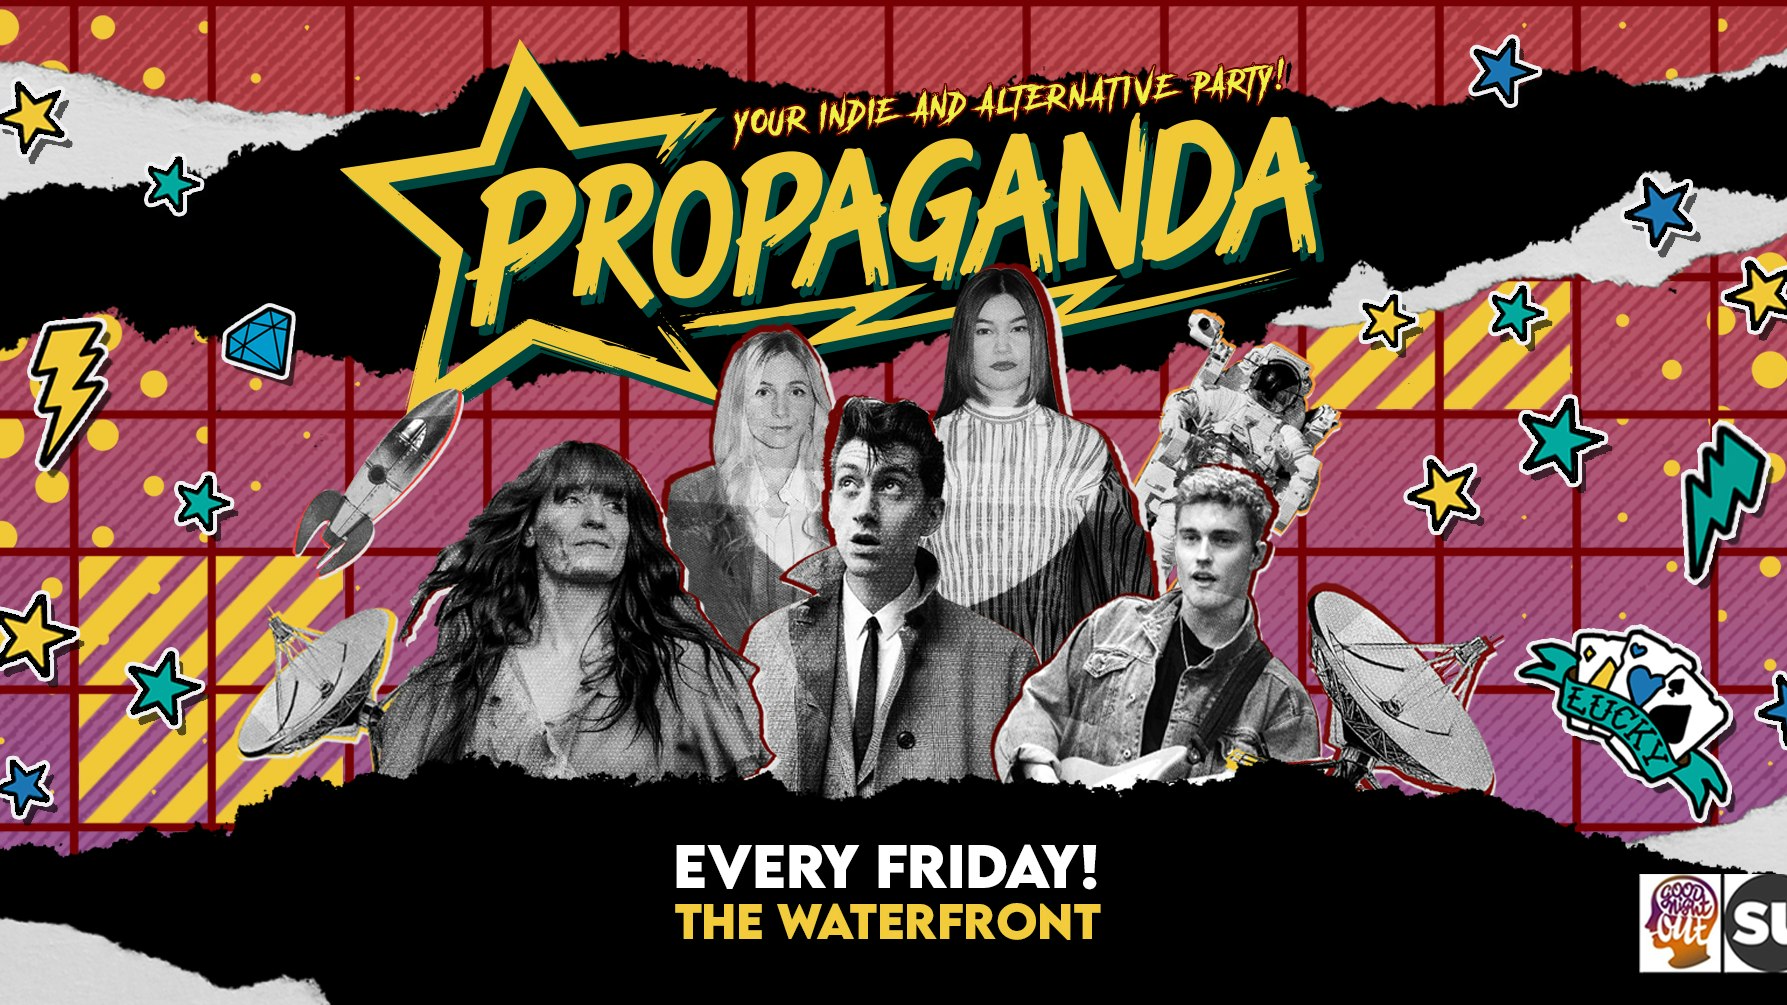 Propaganda Norwich at The Waterfront!